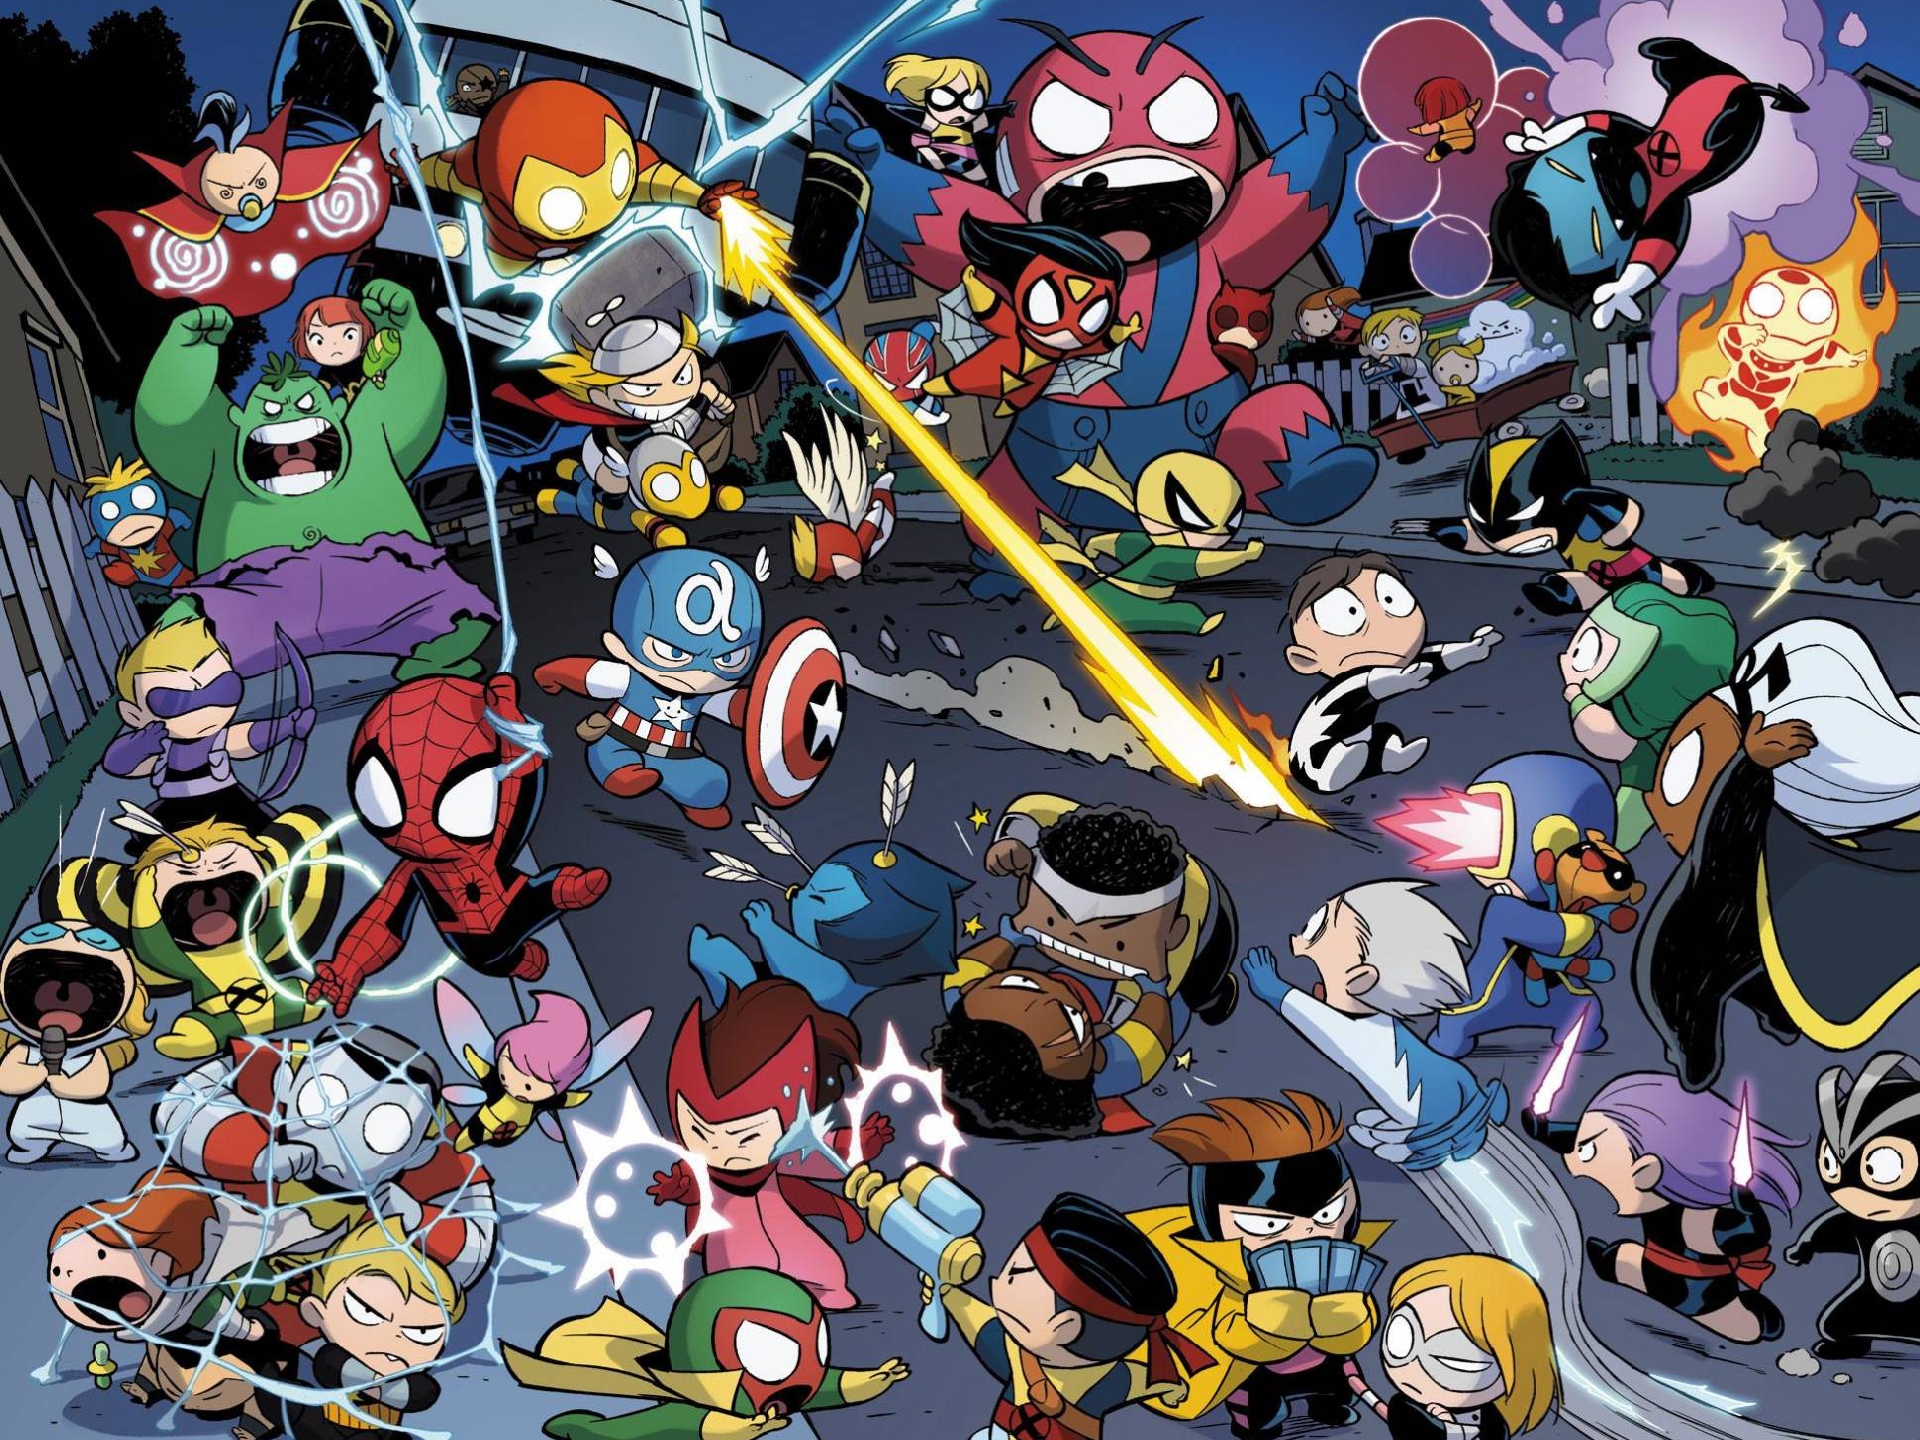 vision (marvel comics), colossus, quicksilver (marvel comics), comics, avengers vs x men babies, angel (marvel comics), avengers, banshee (marvel comics), beast (marvel comics), bishop (marvel comics), black widow, captain america, carol danvers, cyclops (marvel comics), dazzler (marvel comics), gambit (marvel comics), giant man, havok (marvel comics), hawkeye, hope summers, hulk, human torch (marvel comics), iron fist (marvel comics), iron man, longshot (marvel comics), luke cage, ms marvel, namor the sub mariner, nick fury, nightcrawler (marvel comics), pixie (marvel comics), polaris (marvel comics), power pack, psylocke (marvel comics), scarlet witch, spider man, spider woman, storm (marvel comics), wasp (marvel comics), wolverine, x men 2160p